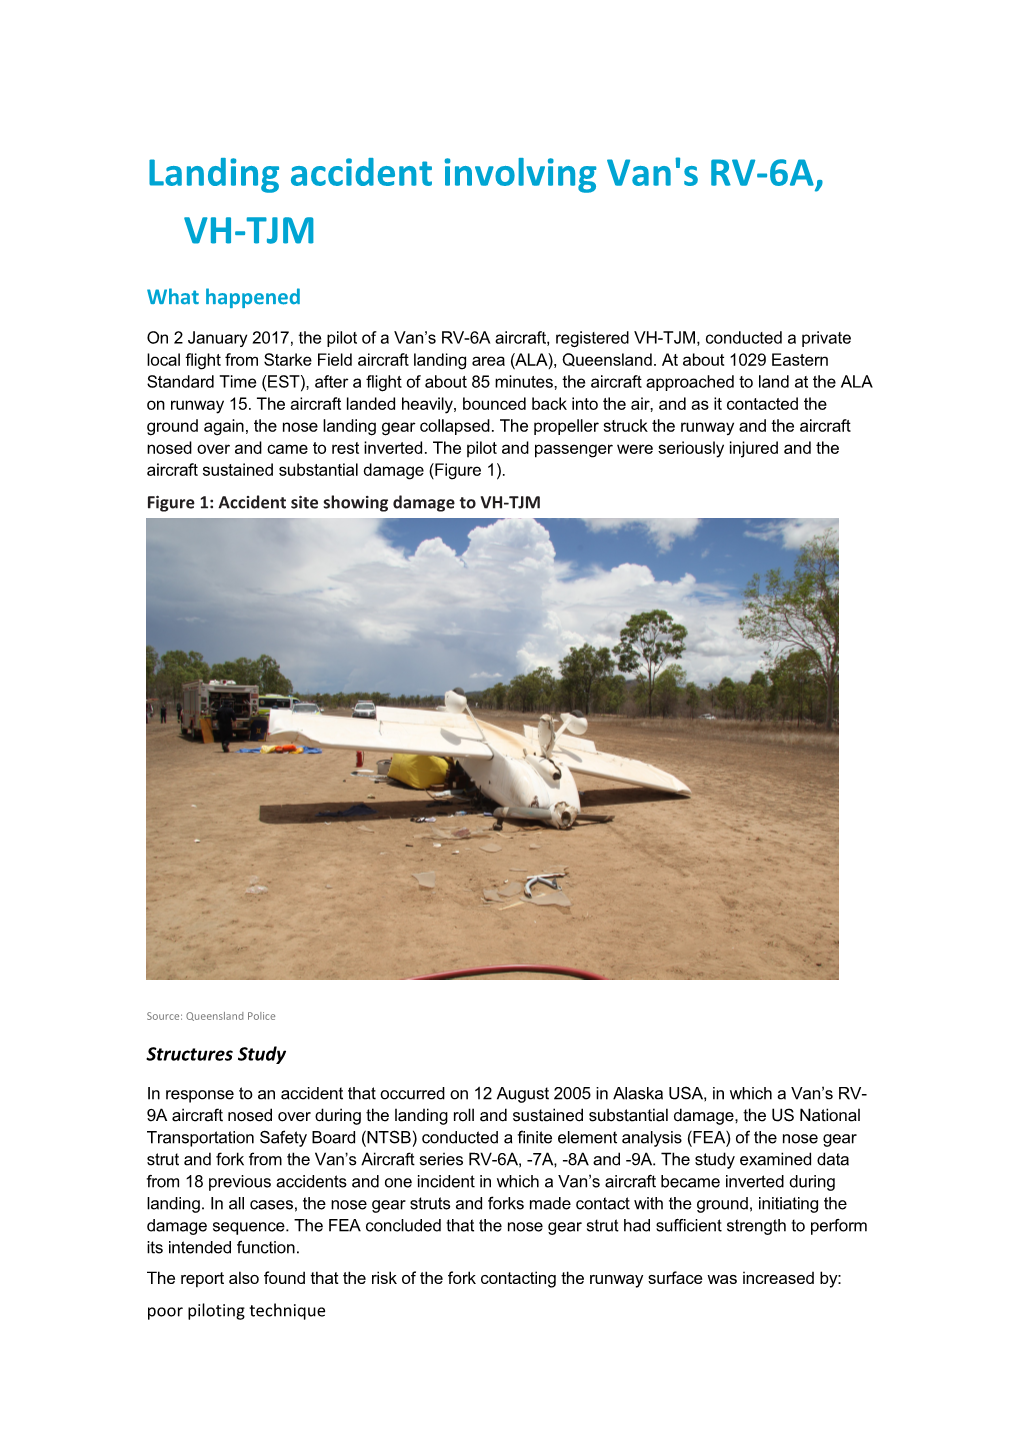 Landing Accident Involving Van's RV-6A, VH-TJM